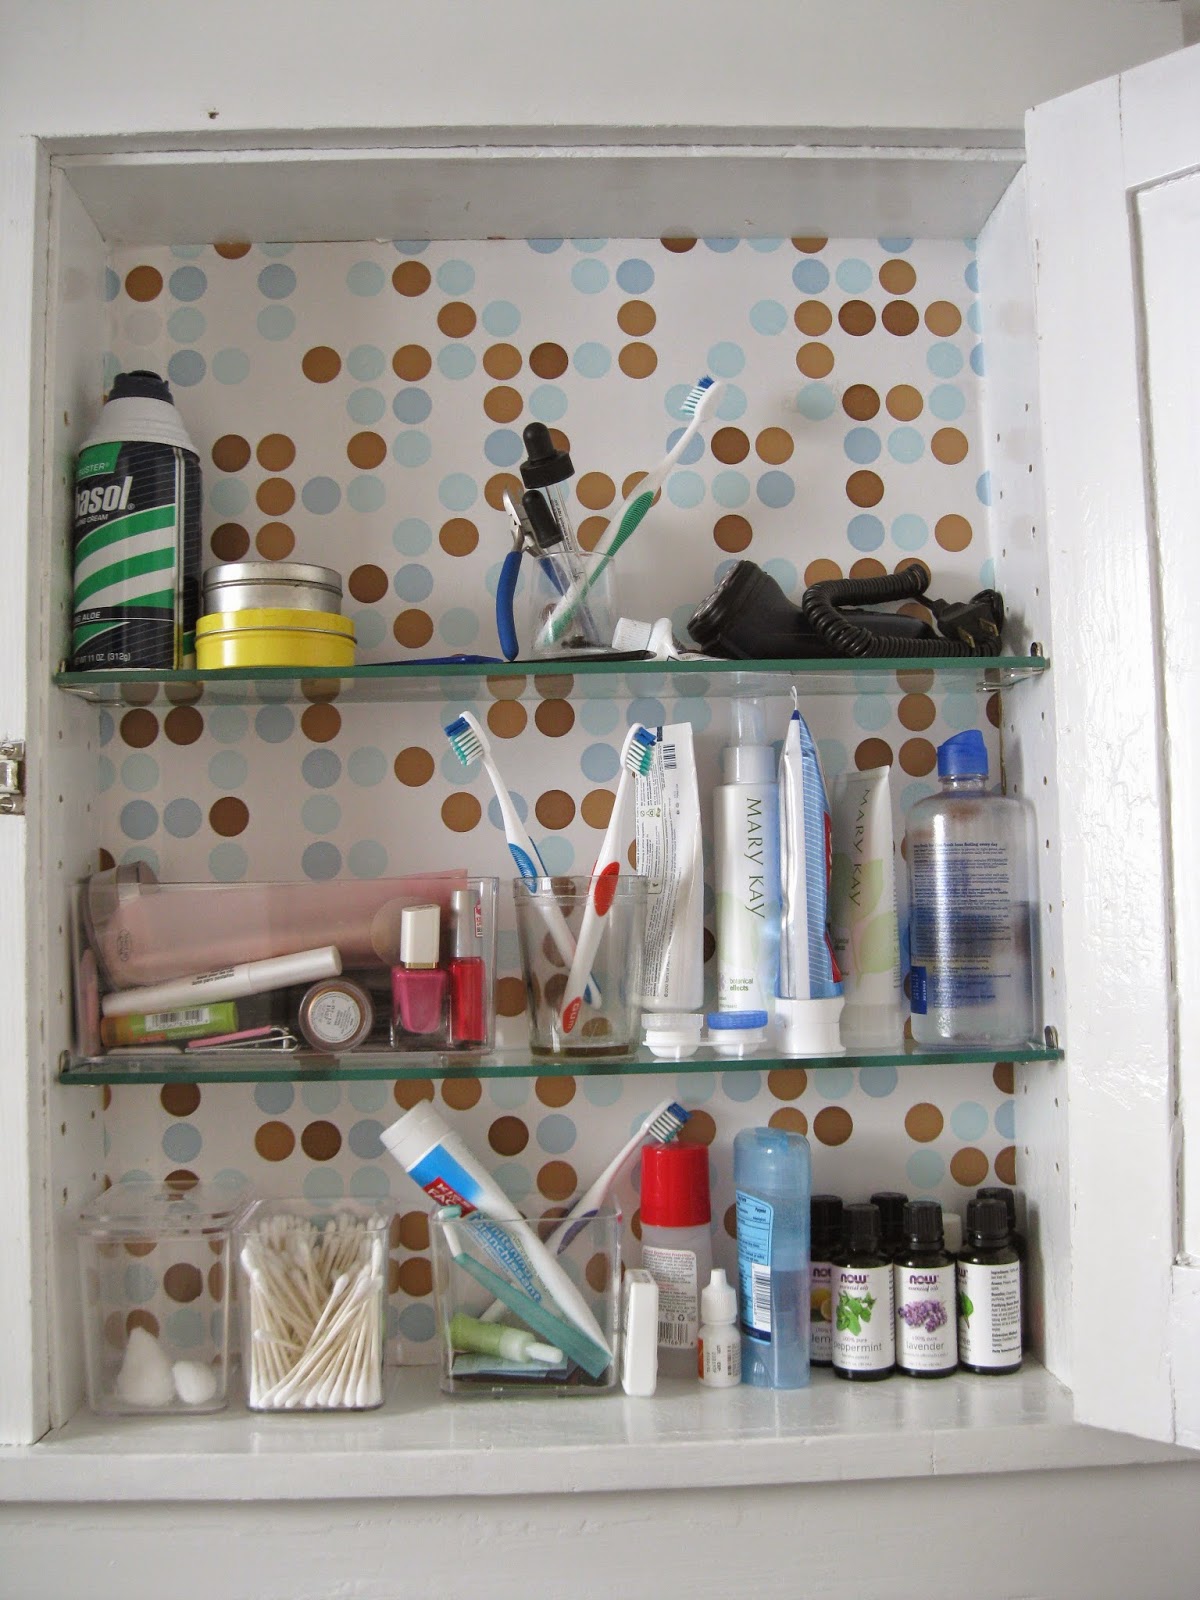 Plastic Bathroom Medicine Cabinet - Buy Plastic Bathroom Medicine Cabinet  Product on